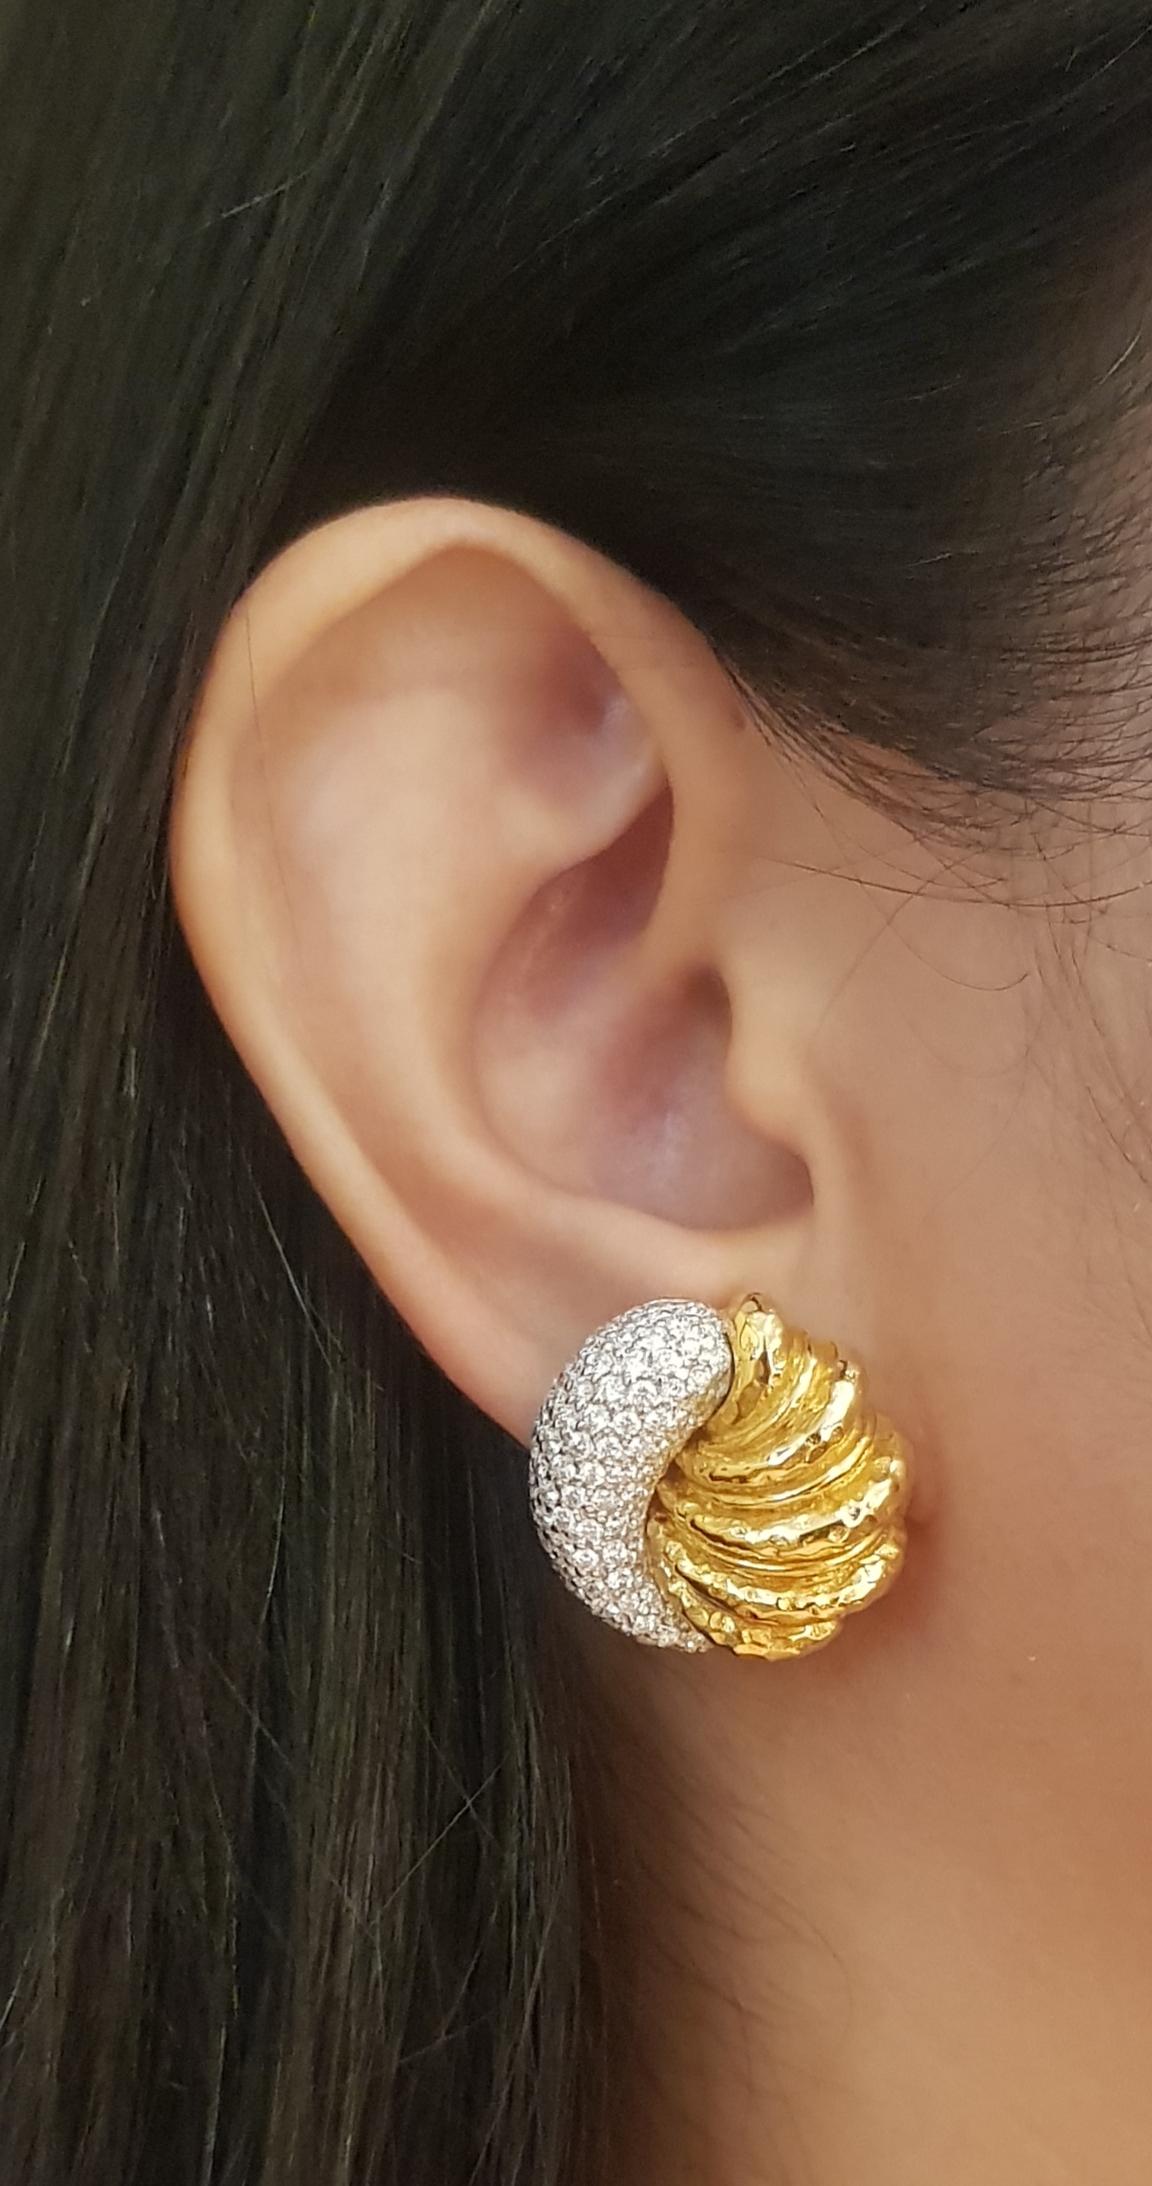 Diamond 2.04 carats Earrings set in 18K Gold Settings

Width: 2.2 cm 
Length: 2.2 cm
Total Weight: 21.41 grams

